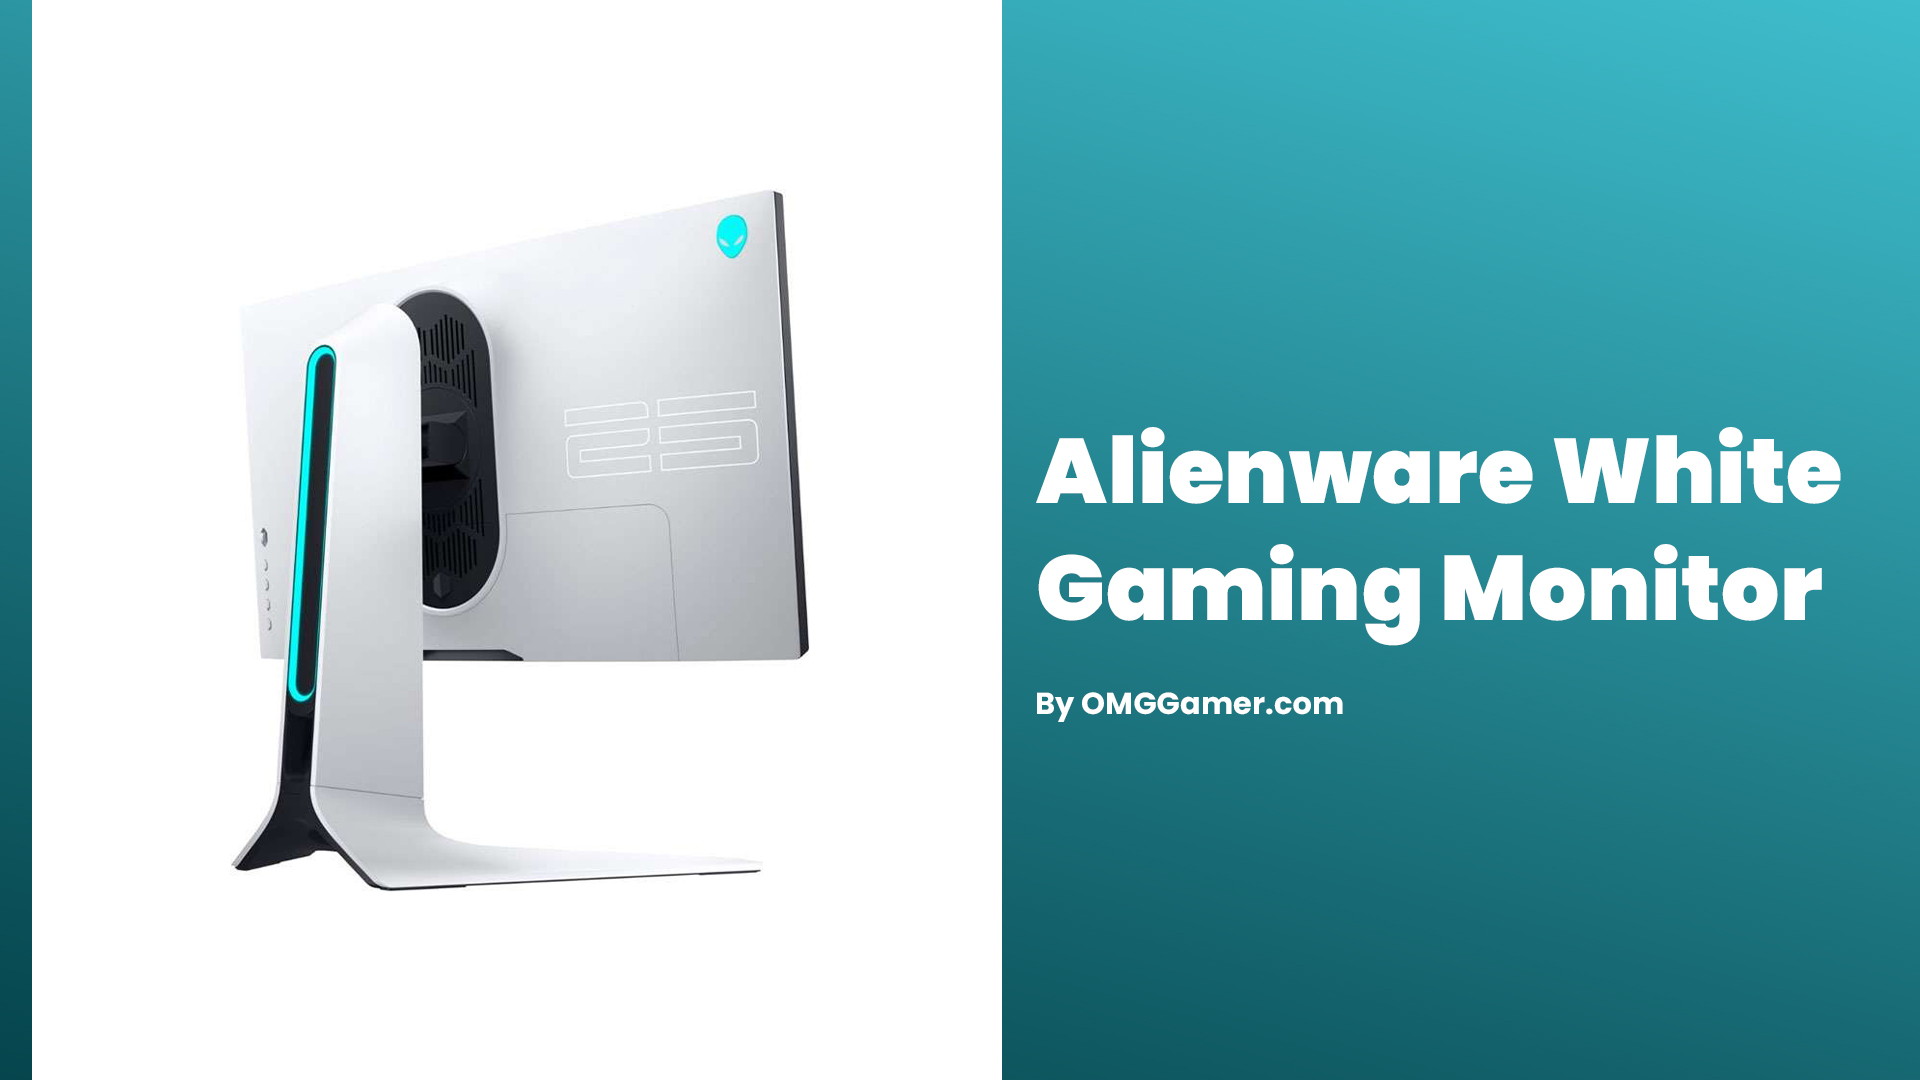 Alienware White Gaming Monitor